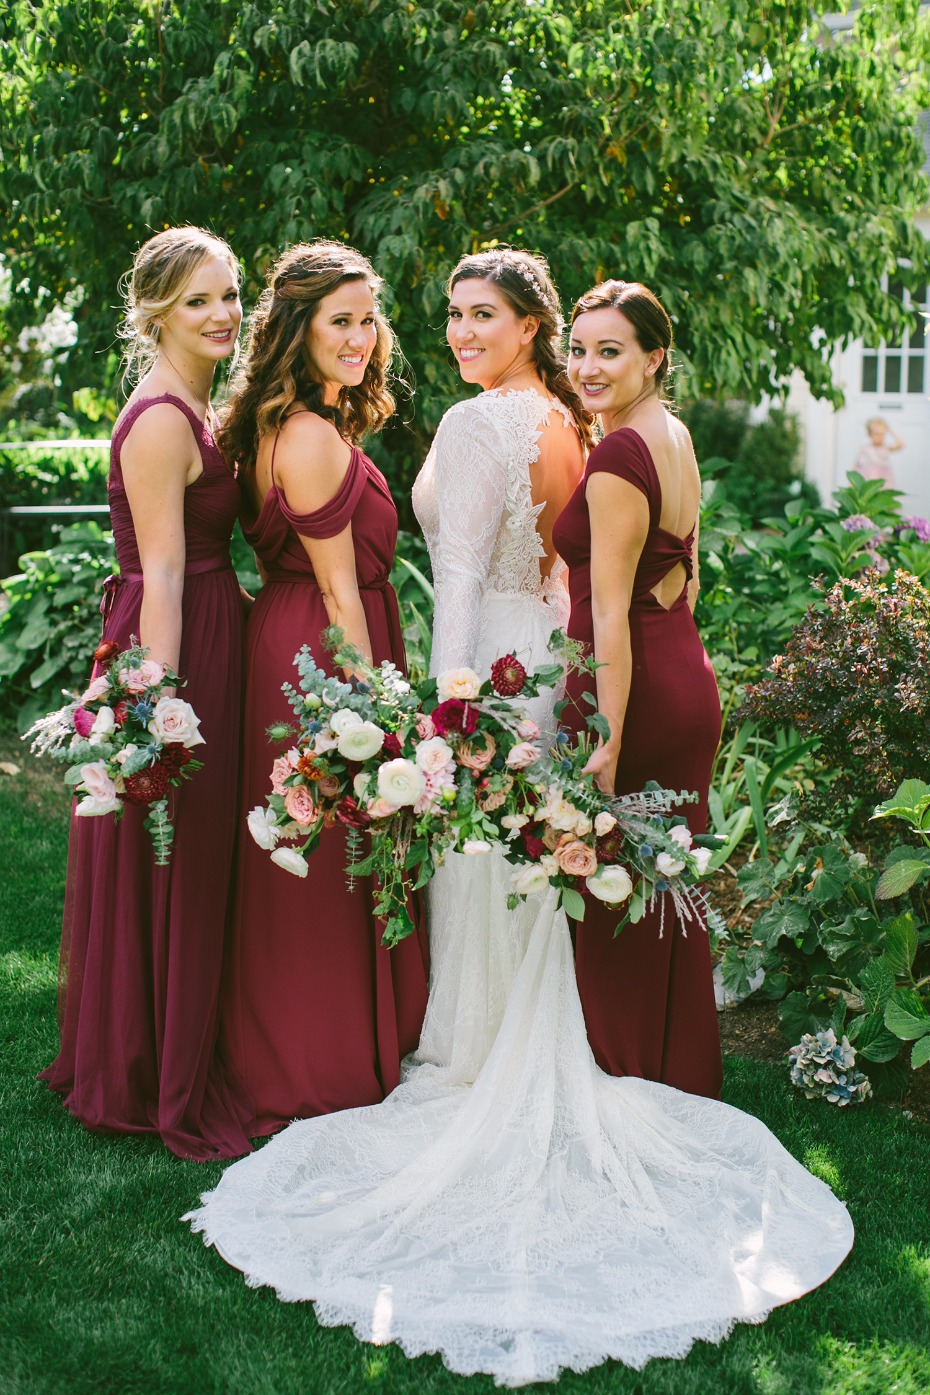 Mix and match burgundy bridesmaid dresses